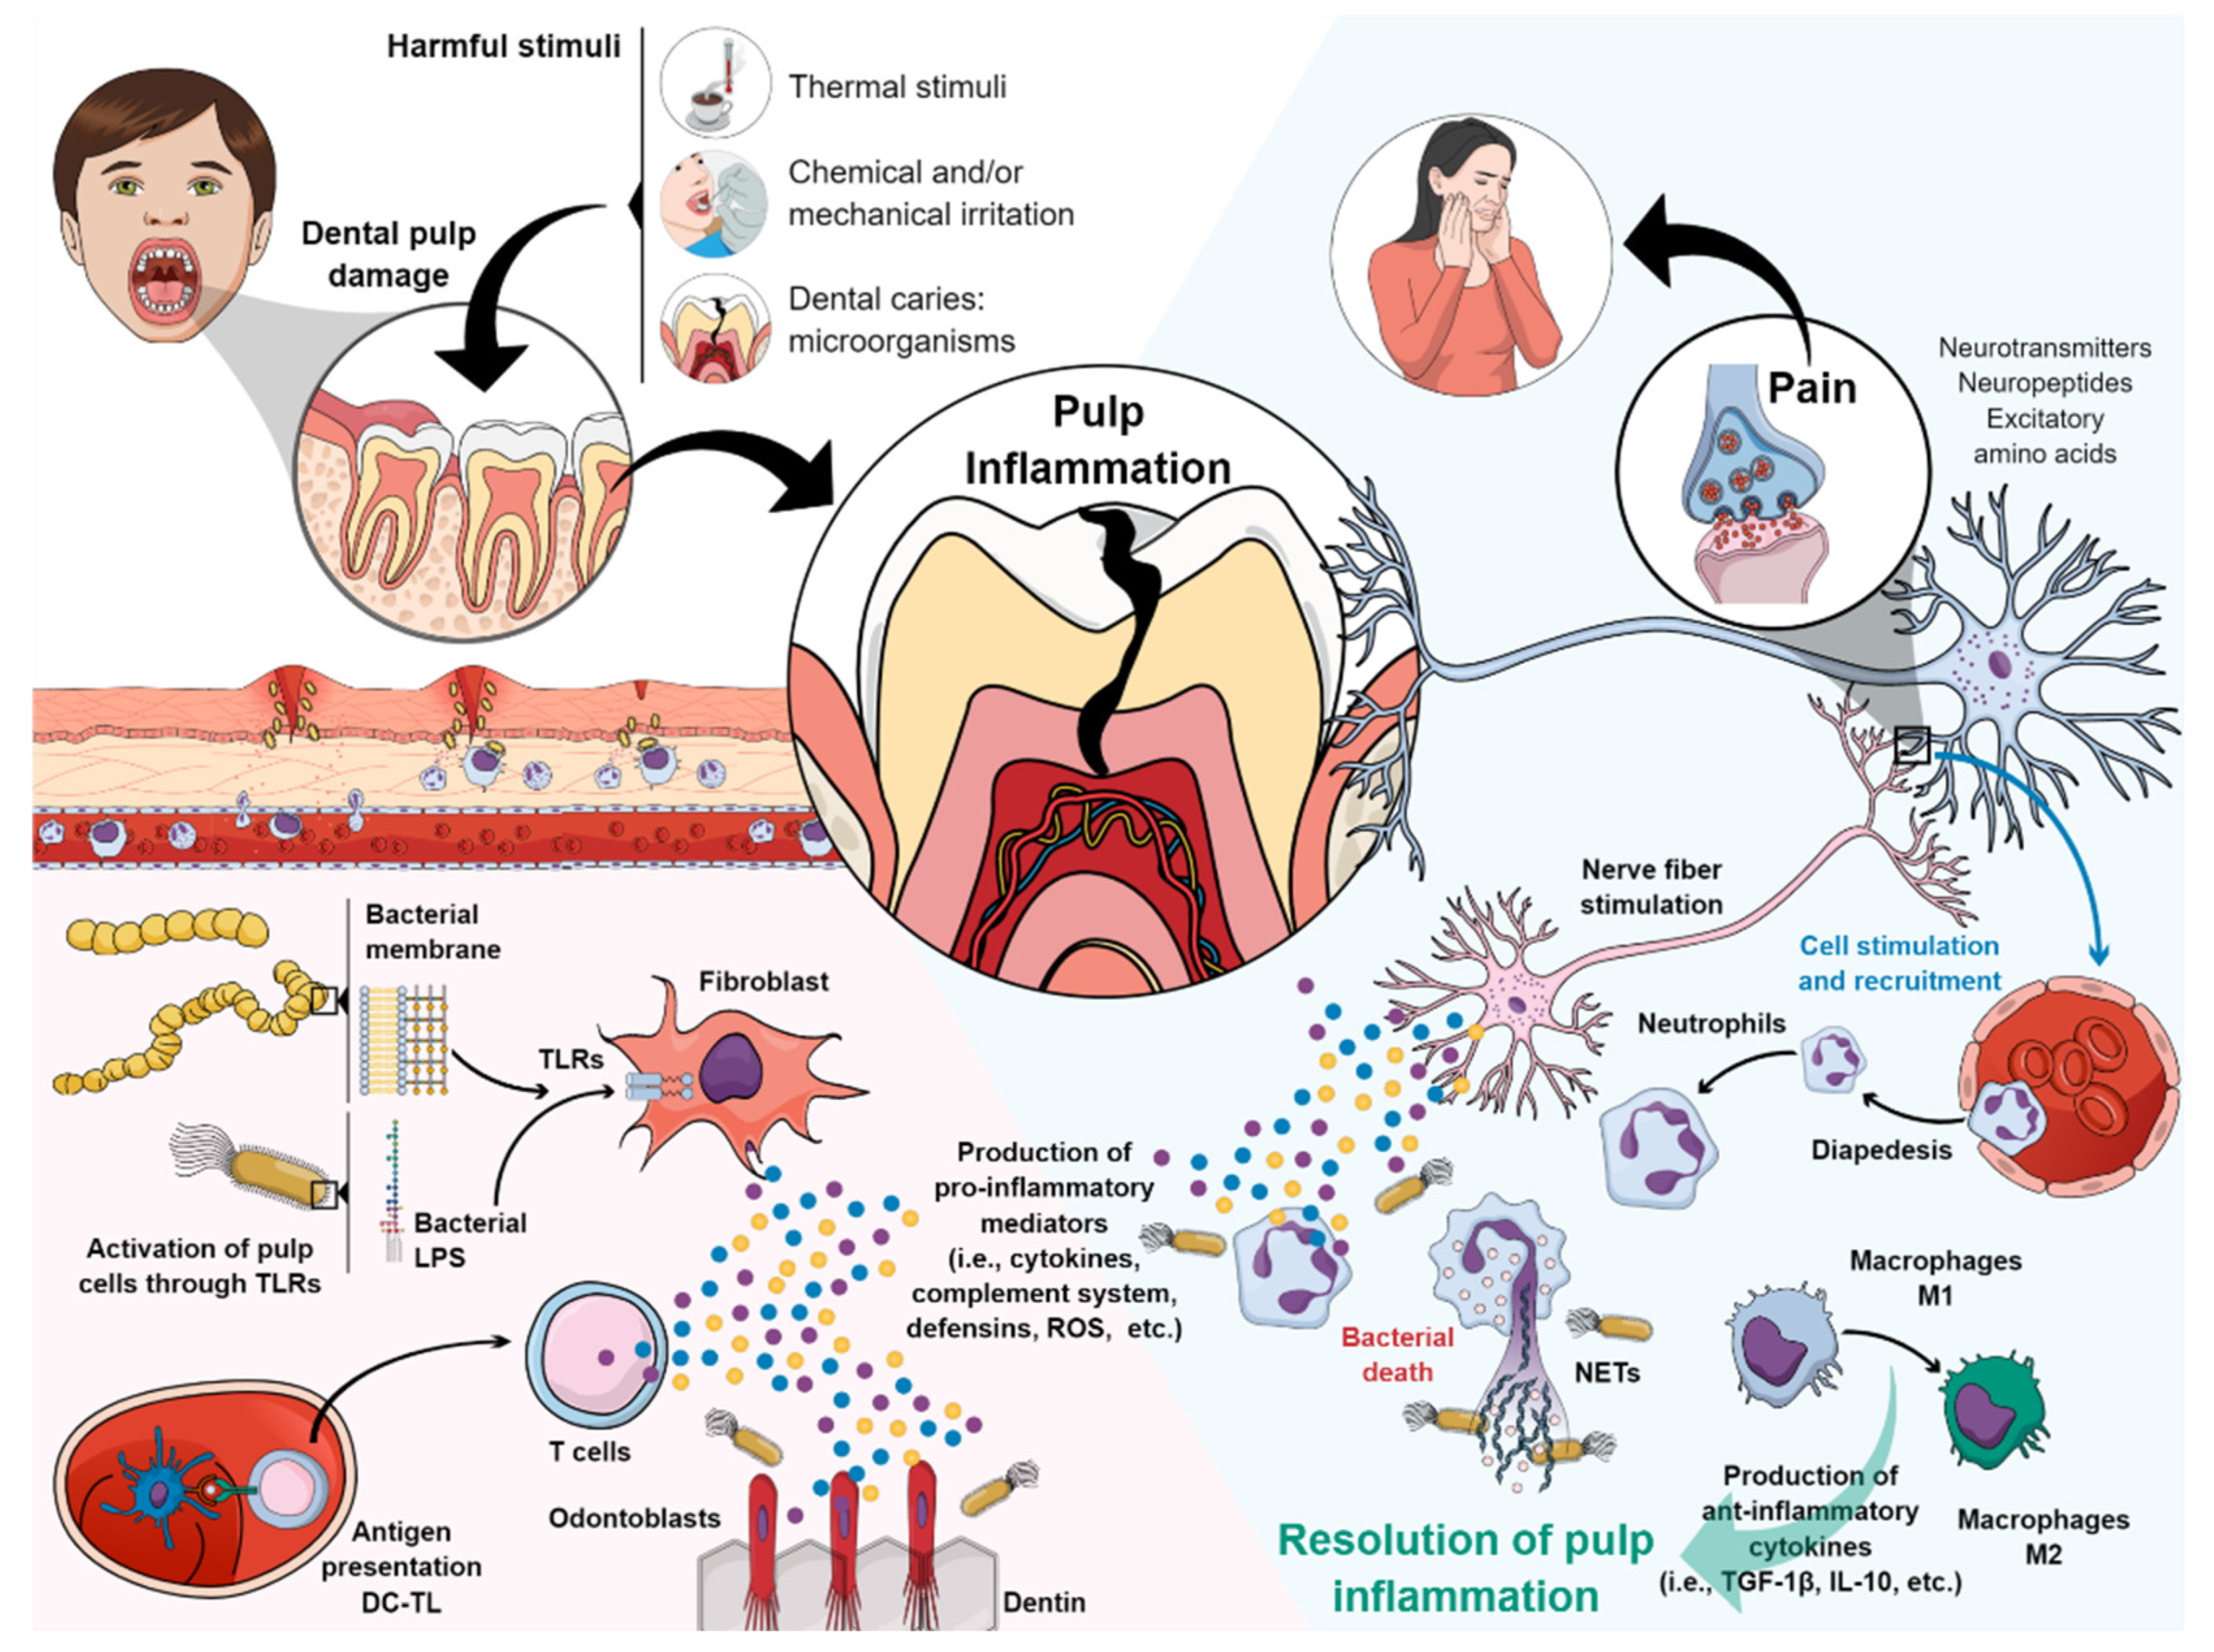 PDF) MicroRNA-124-3p suppresses mouse lip mesenchymal cell